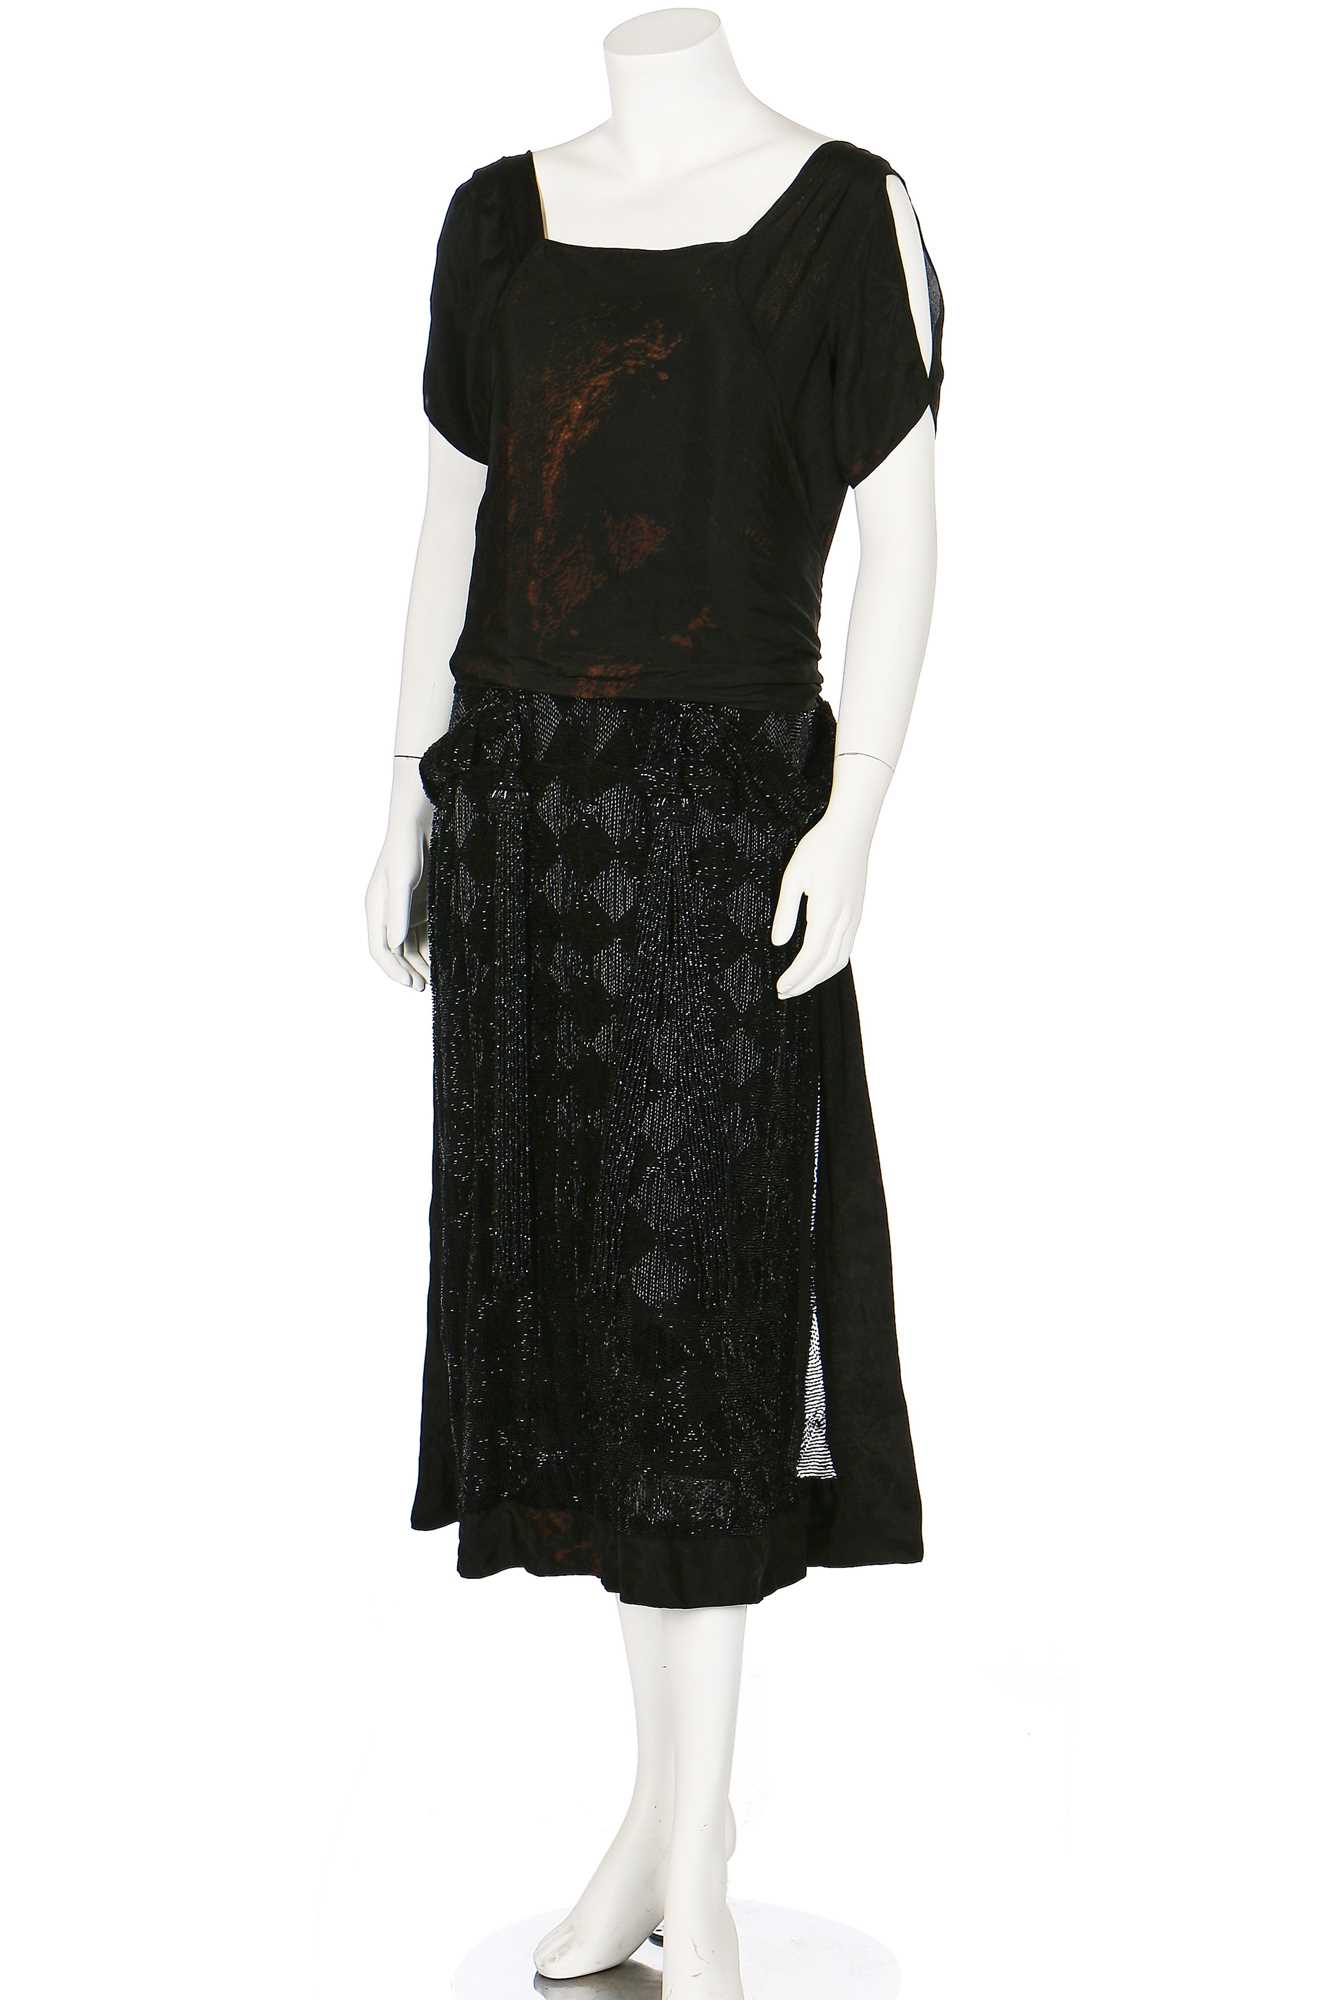 coco chanel original little black dress